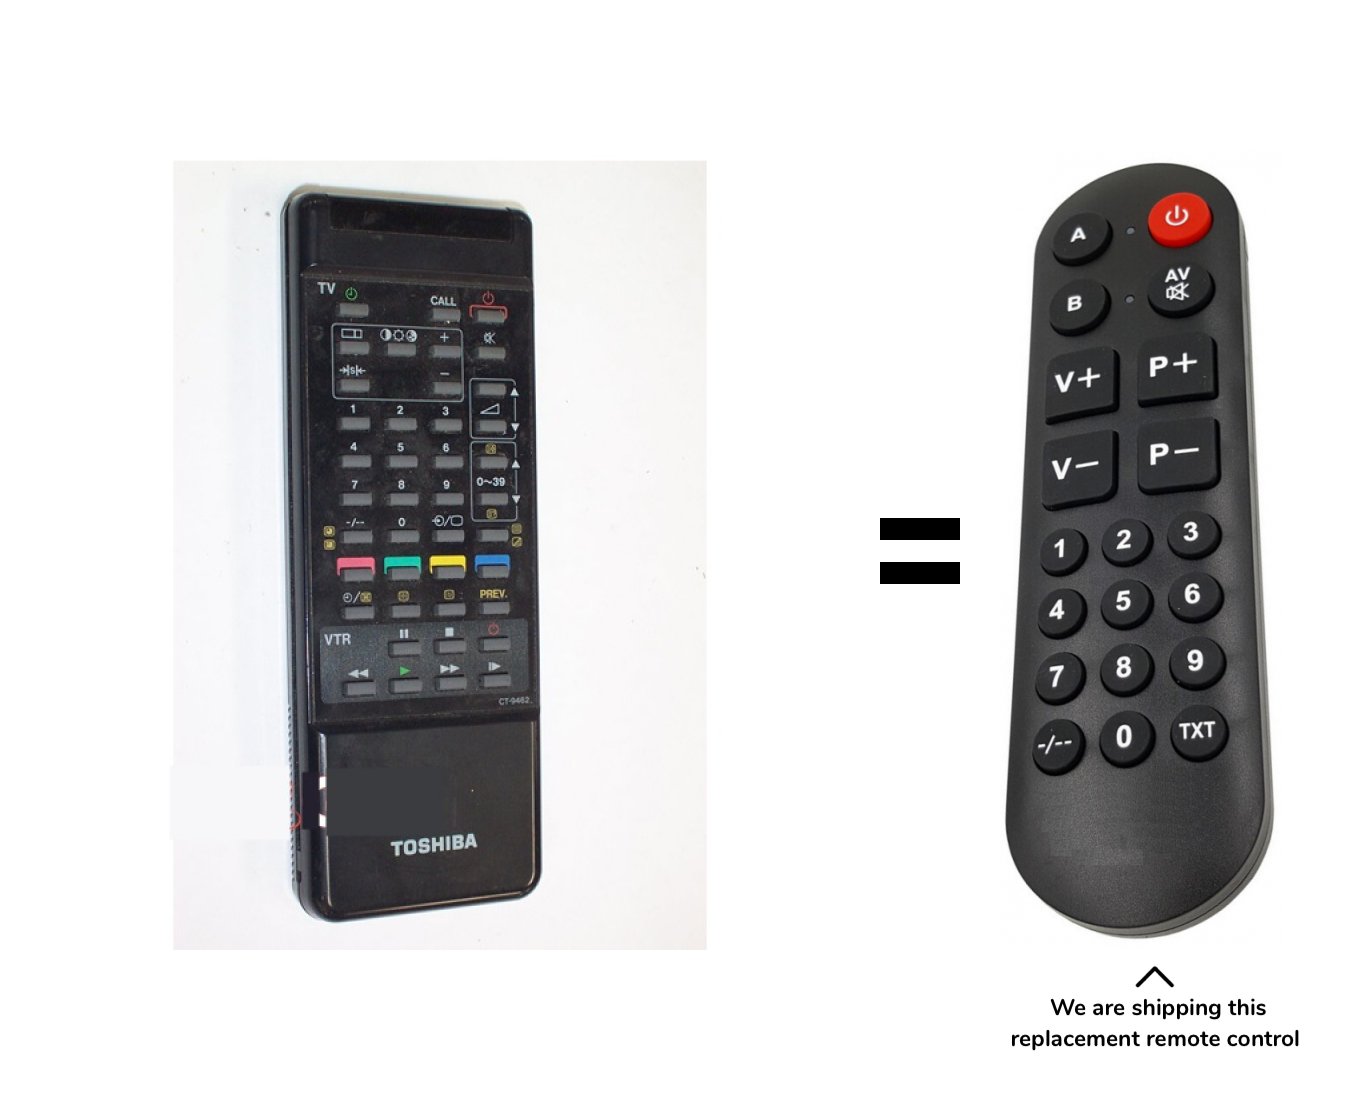 Toshiba CT-9432 remote control for seniors